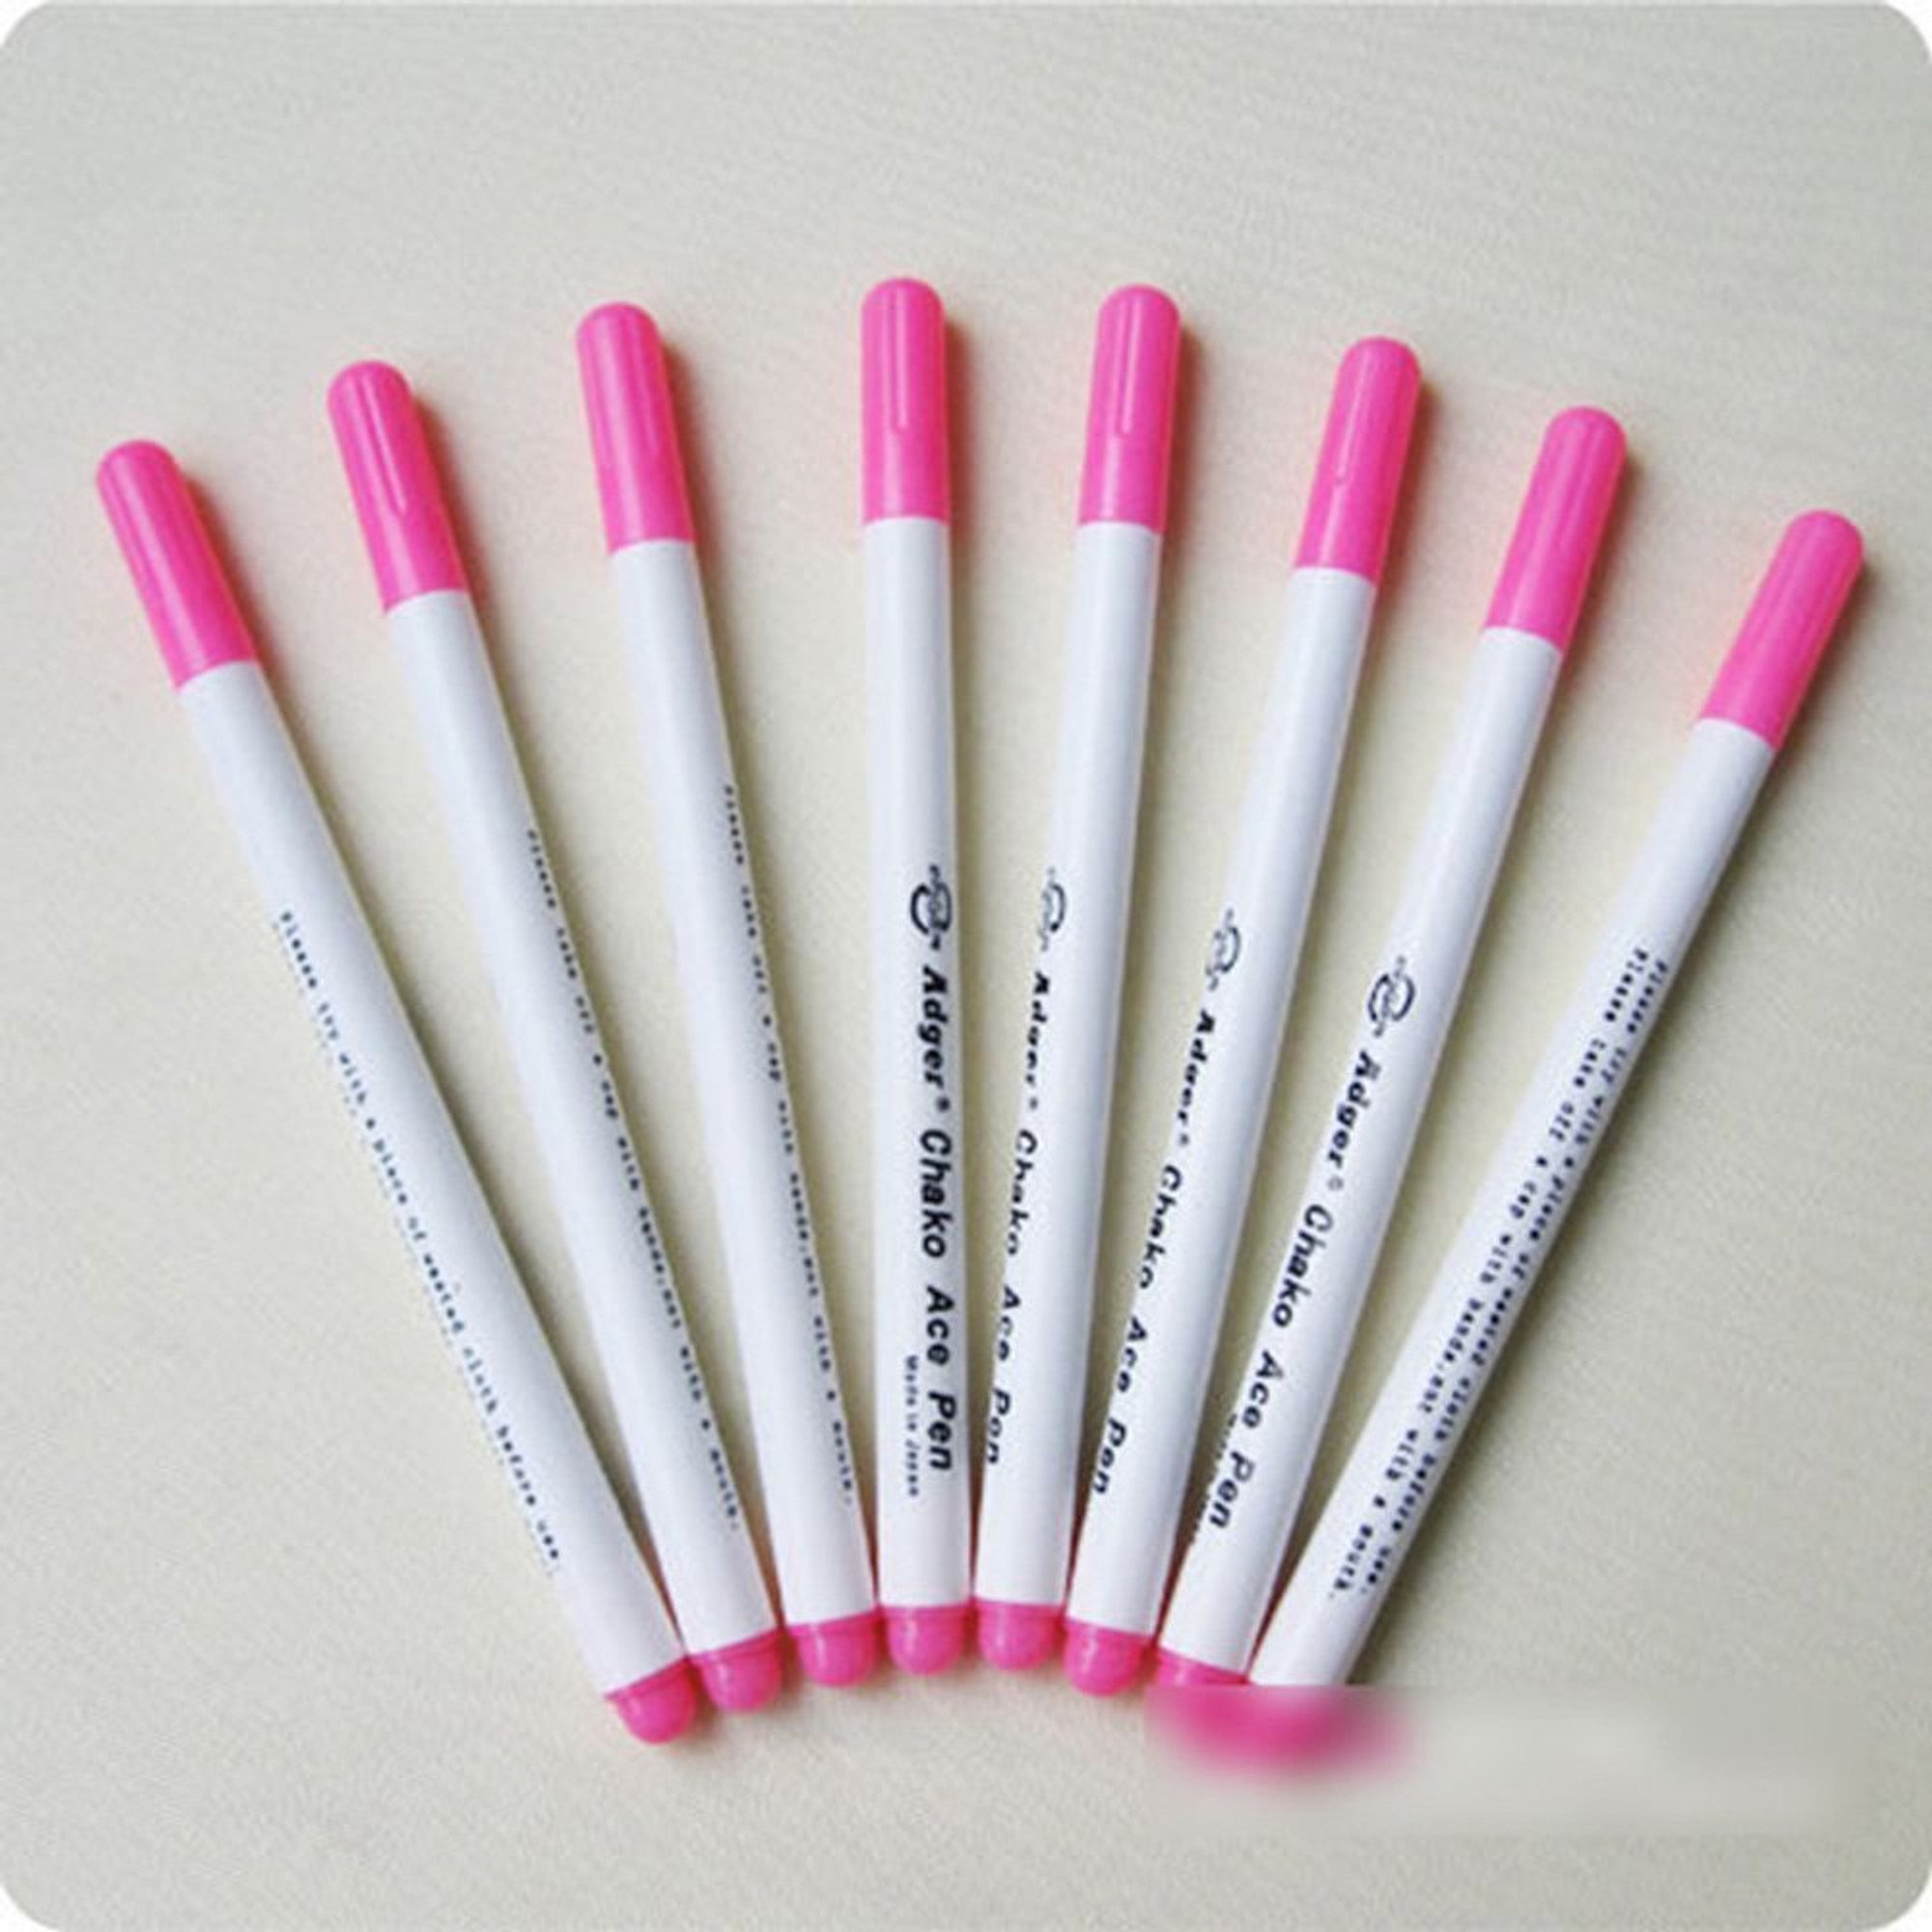 Water Soluble Marker for needlework Needlework Pink - Veralis